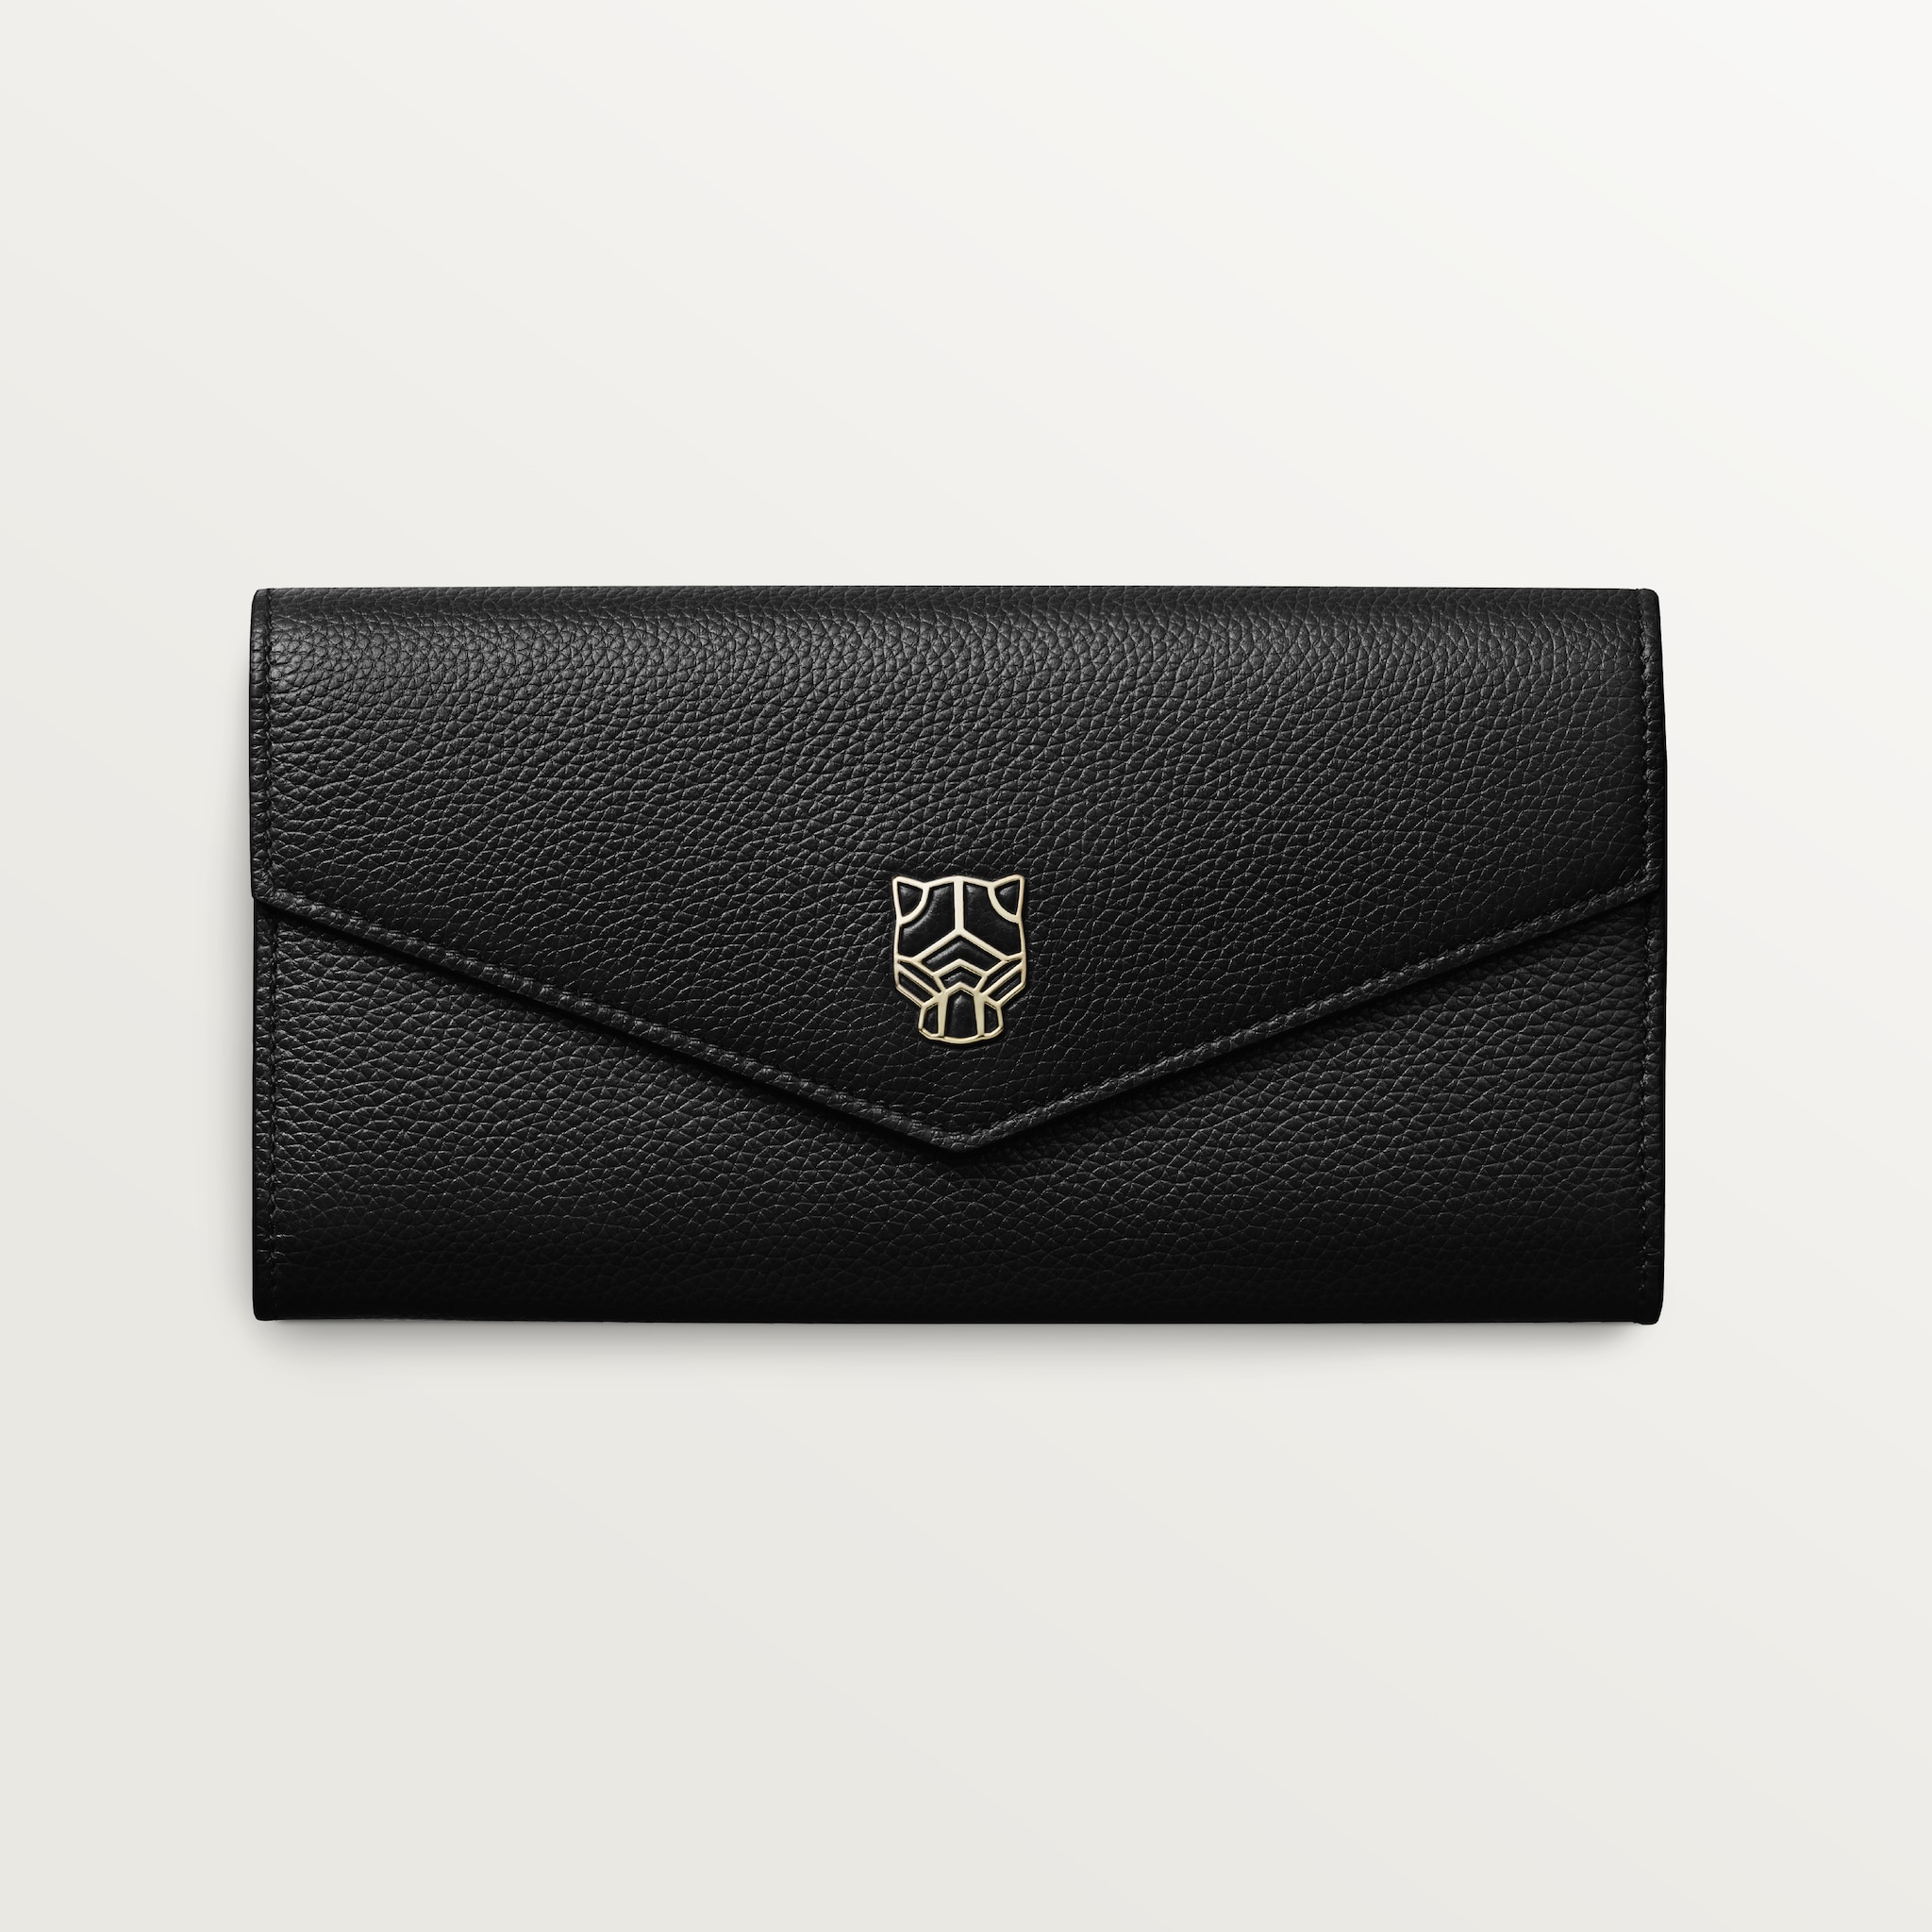 International wallet with flap, Panthère de CartierBlack calfskin, golden finish and black enamel